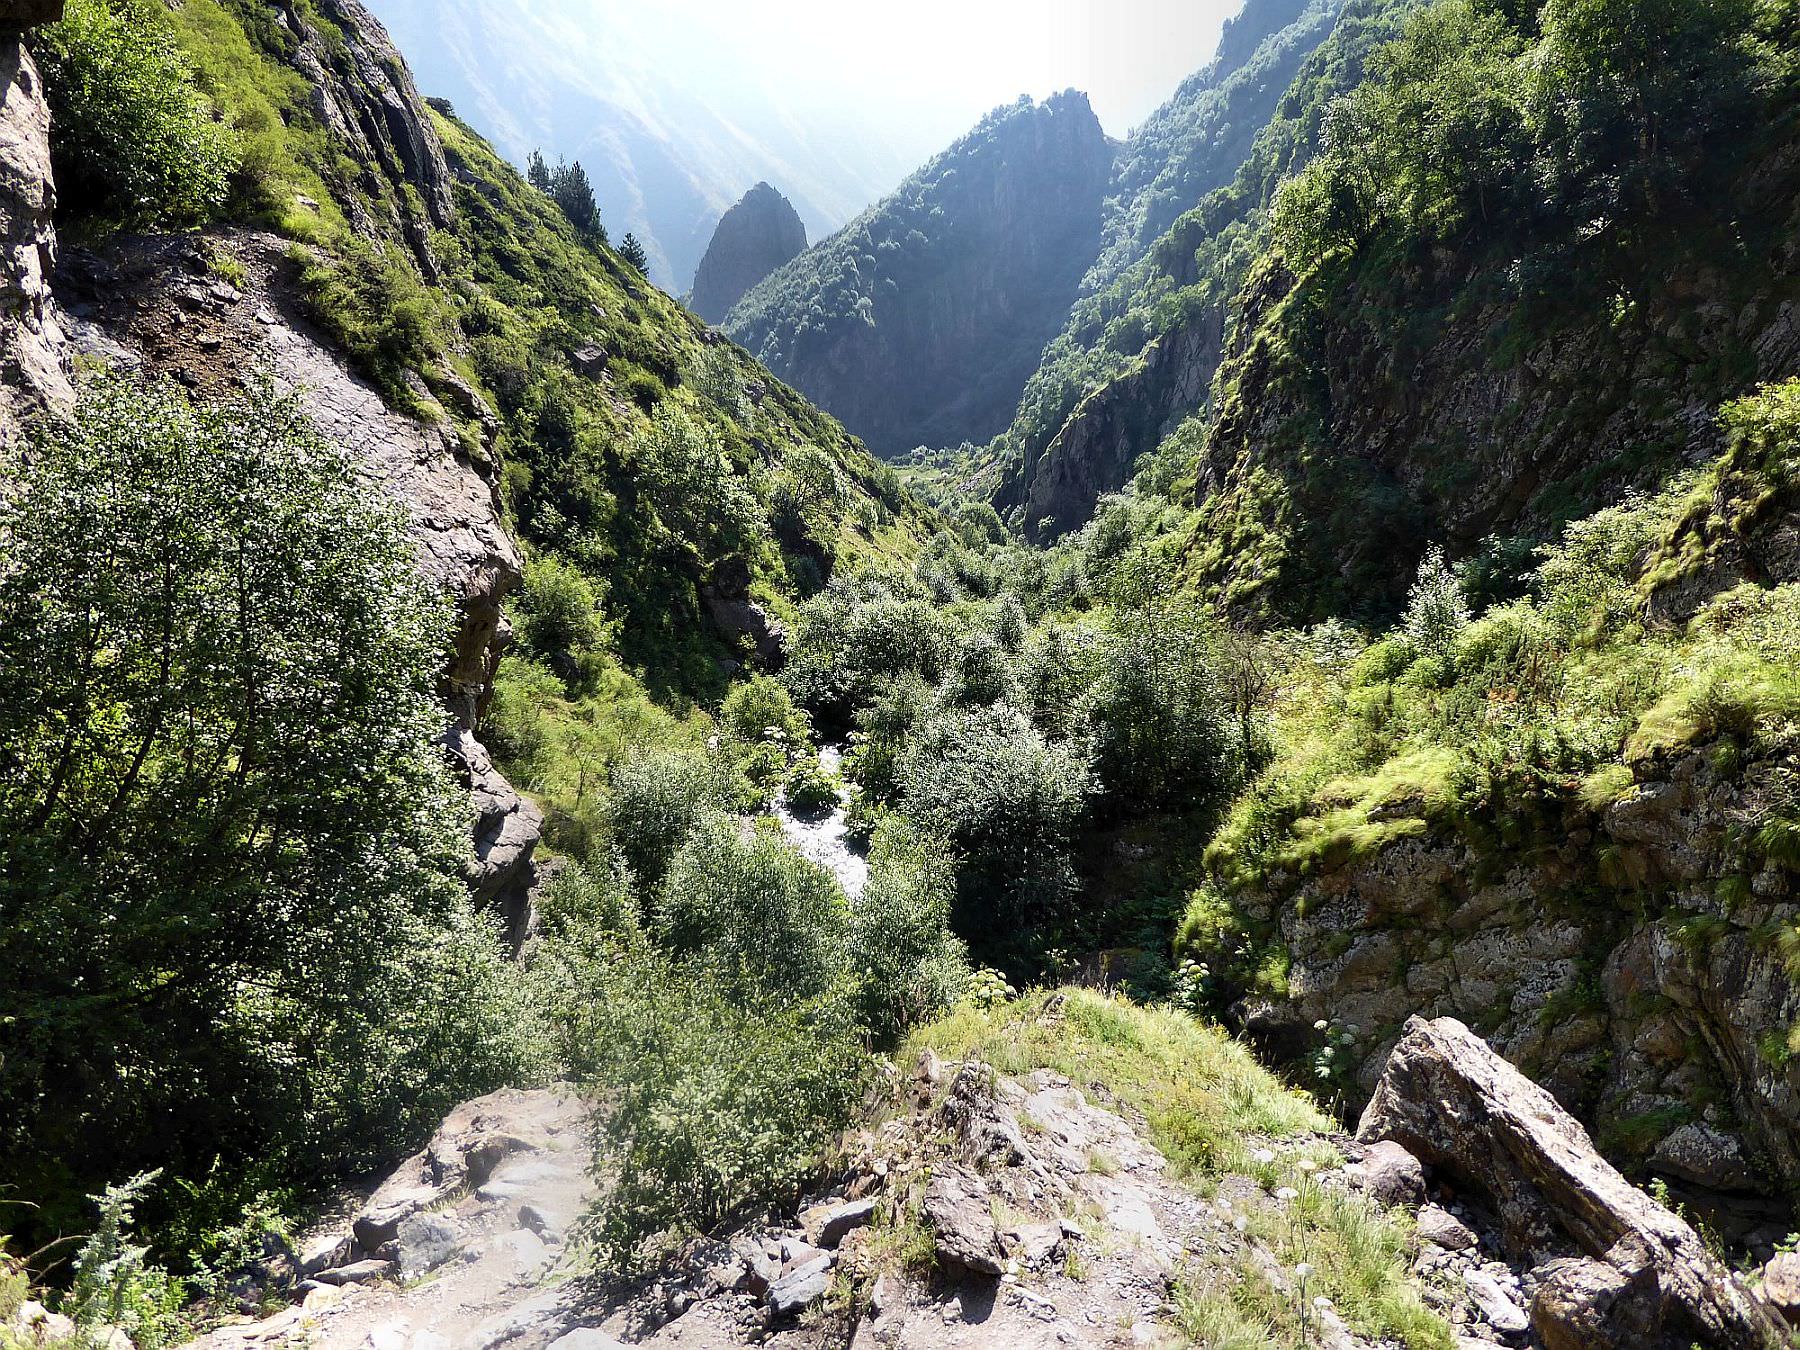 Gveleti valley from the bigger waterfall